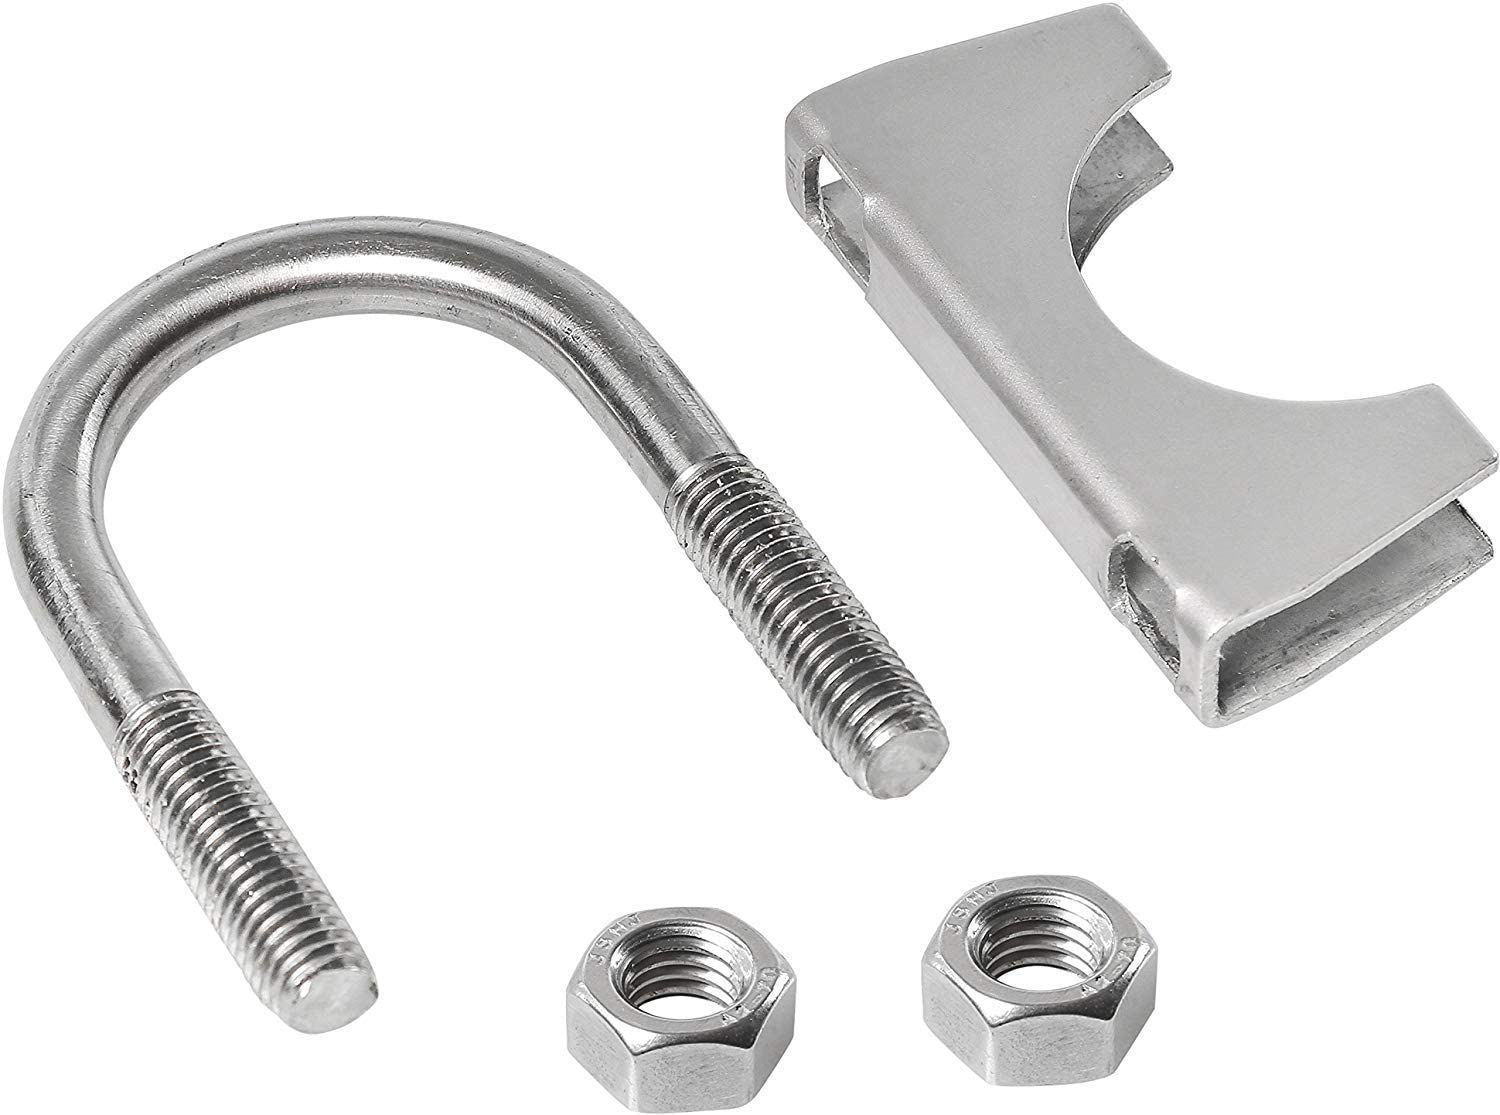 https://www.totalflowusa.com/images/thumbs/0002674_totalflow-tf-uz300-u-bolt-saddle-exhaust-muffler-clamp-band-3-inch.jpeg